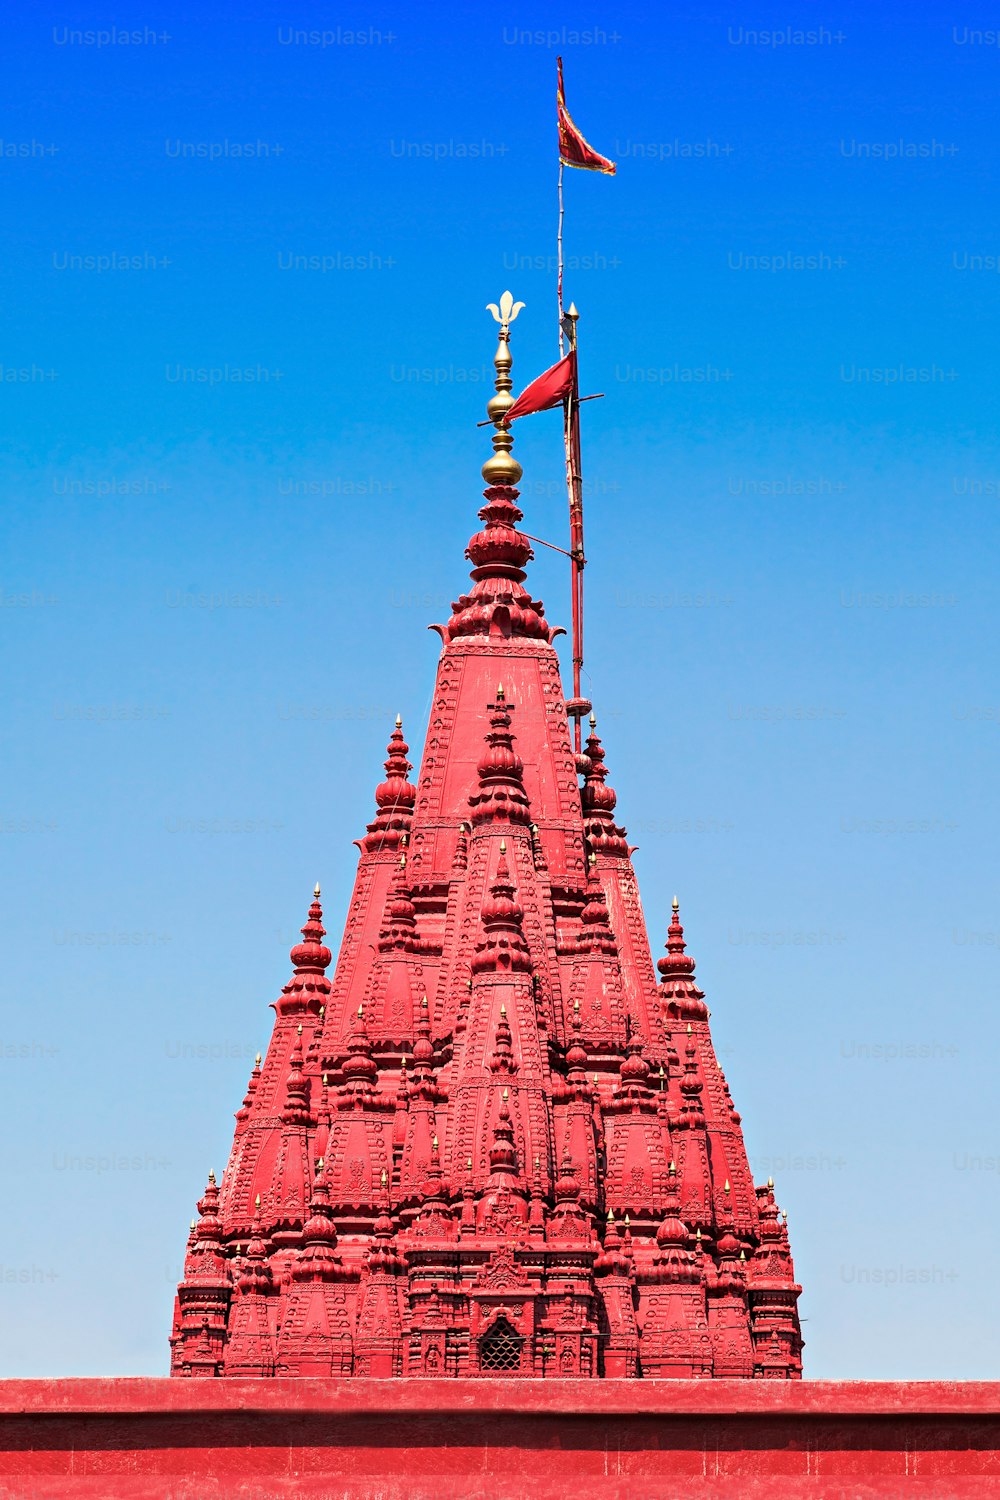 Tempio rosso di Durga (scimmia) a Varanasi, India